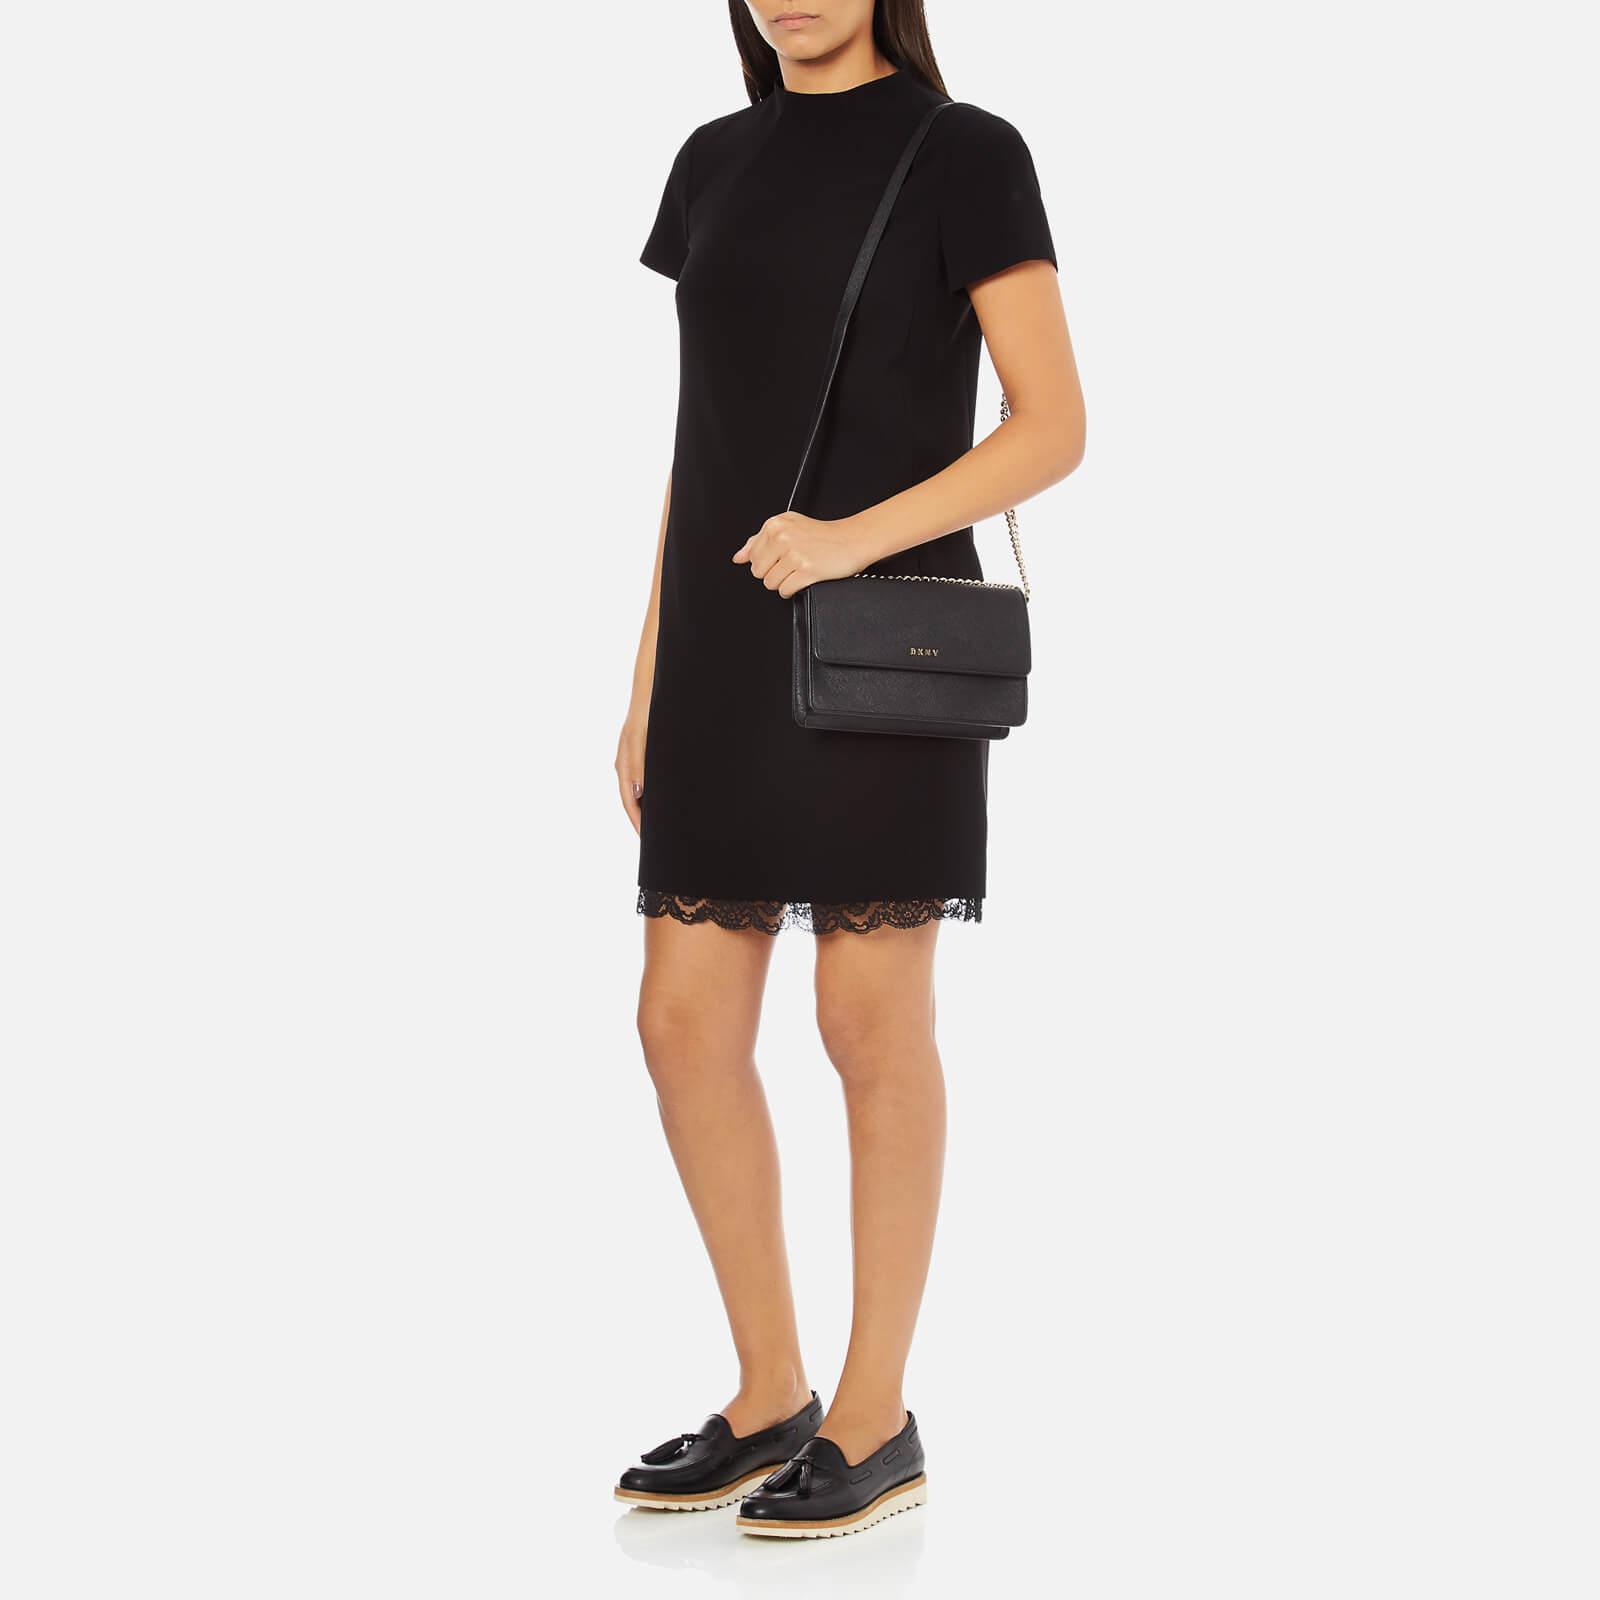 DKNY Leather Bryant Park Small Flap Crossbody Bag in Black - Lyst